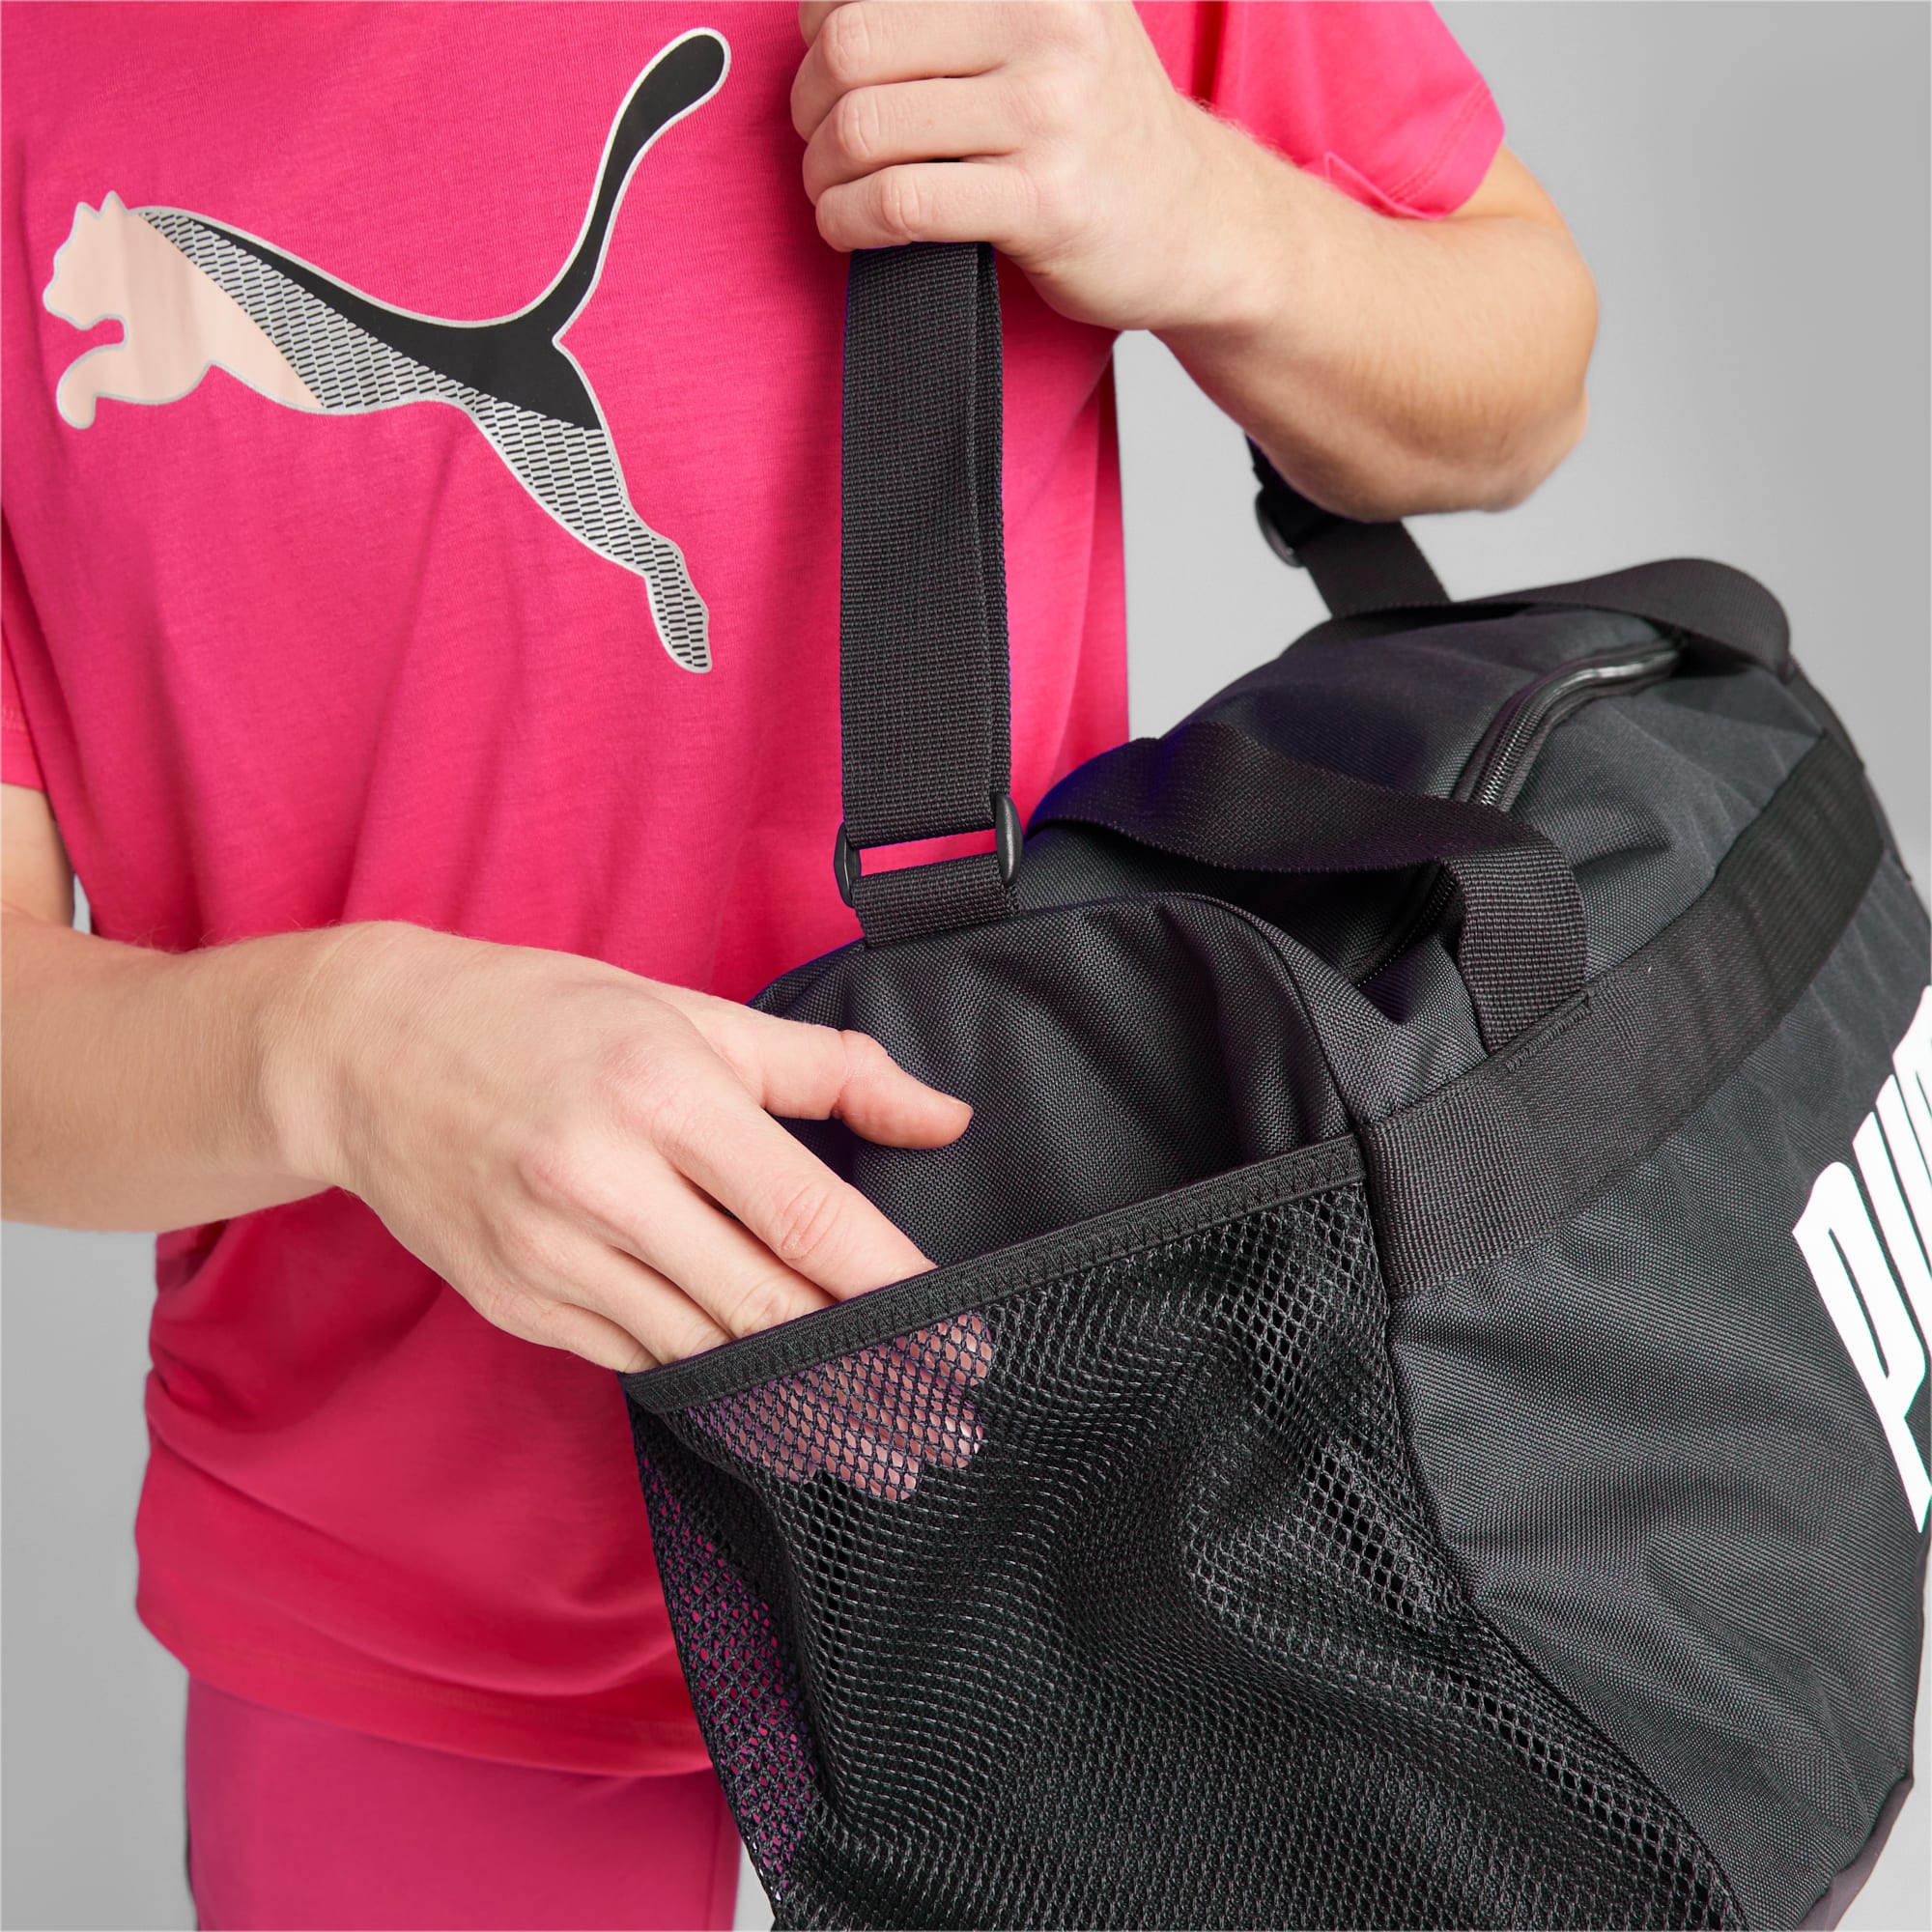 Women's PUMA Challenger S Duffle Bag, Black, Accessories